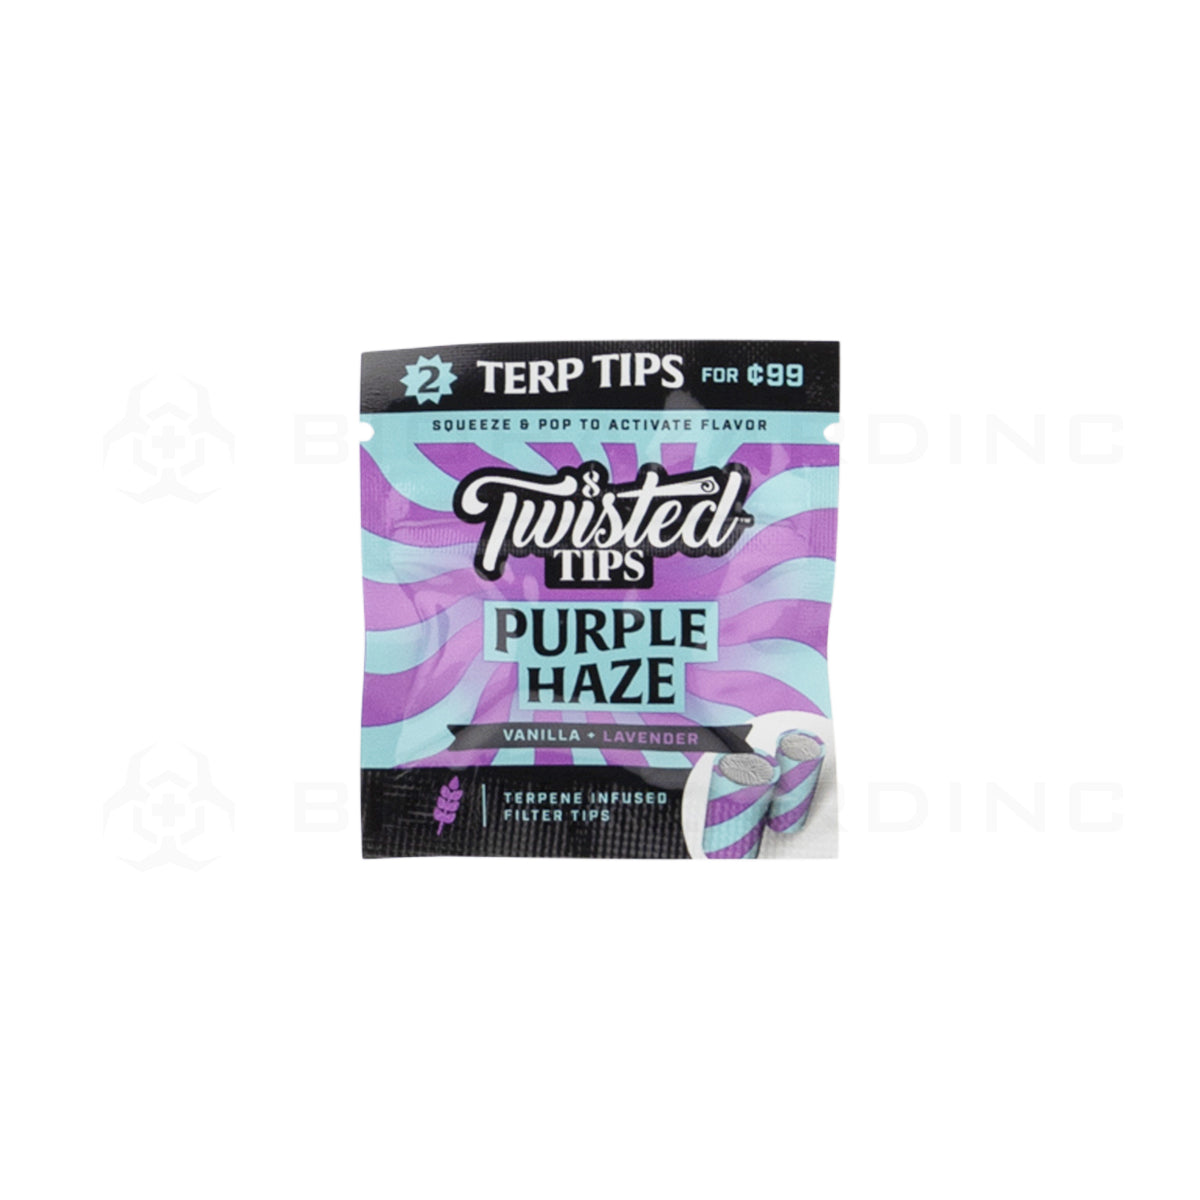 Twisted Tips | 'Retail Display' Terpene Infused 2 Packs | 24 Count Paper Tips Twisted Hemp Purple Haze  